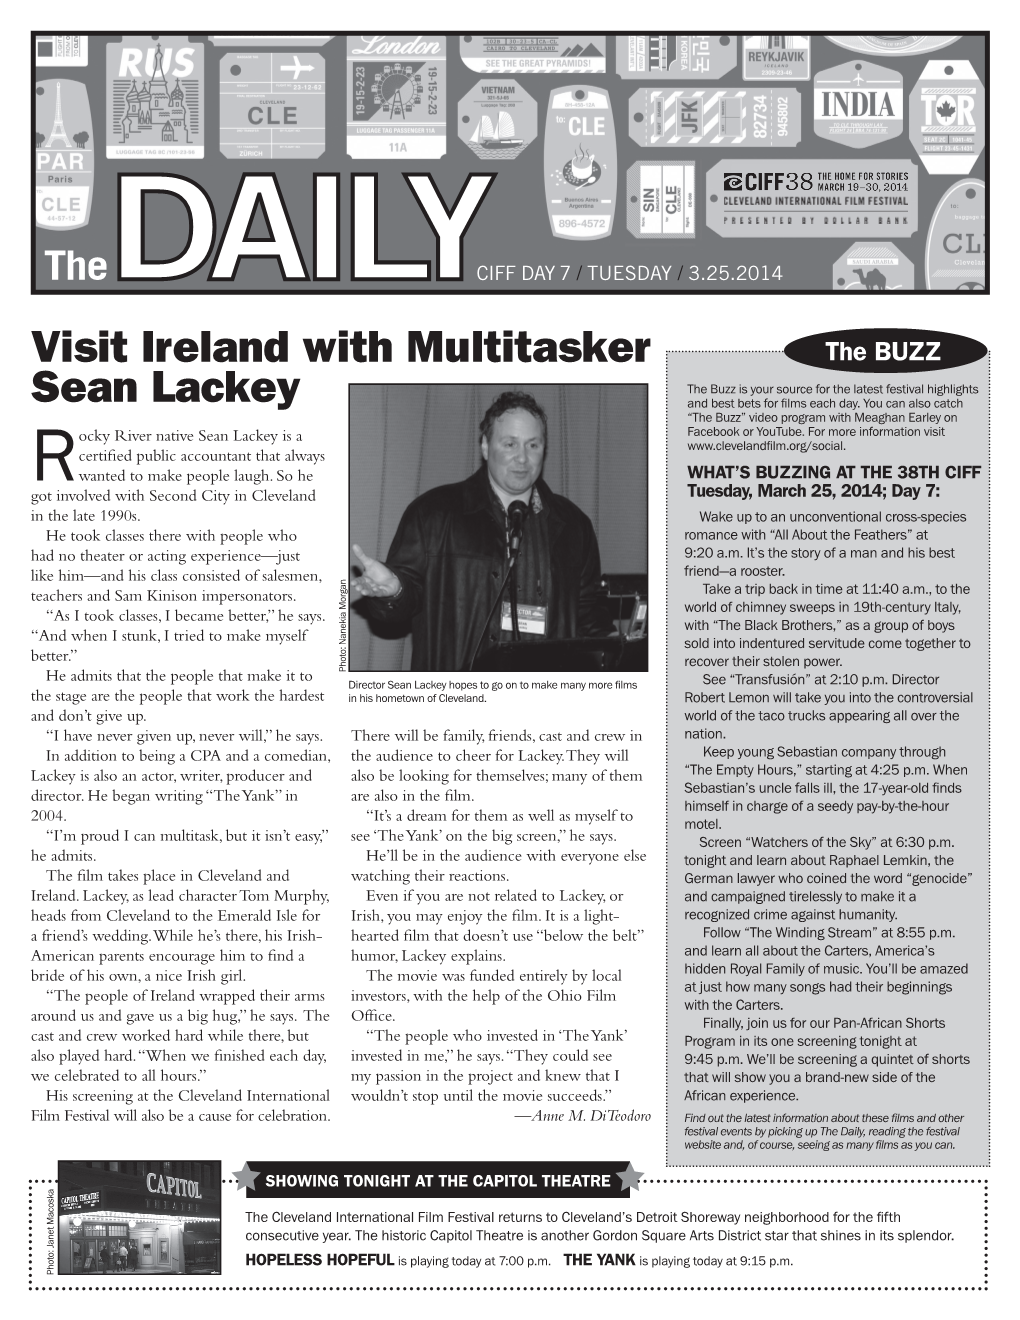 Visit Ireland with Multitasker Sean Lackey